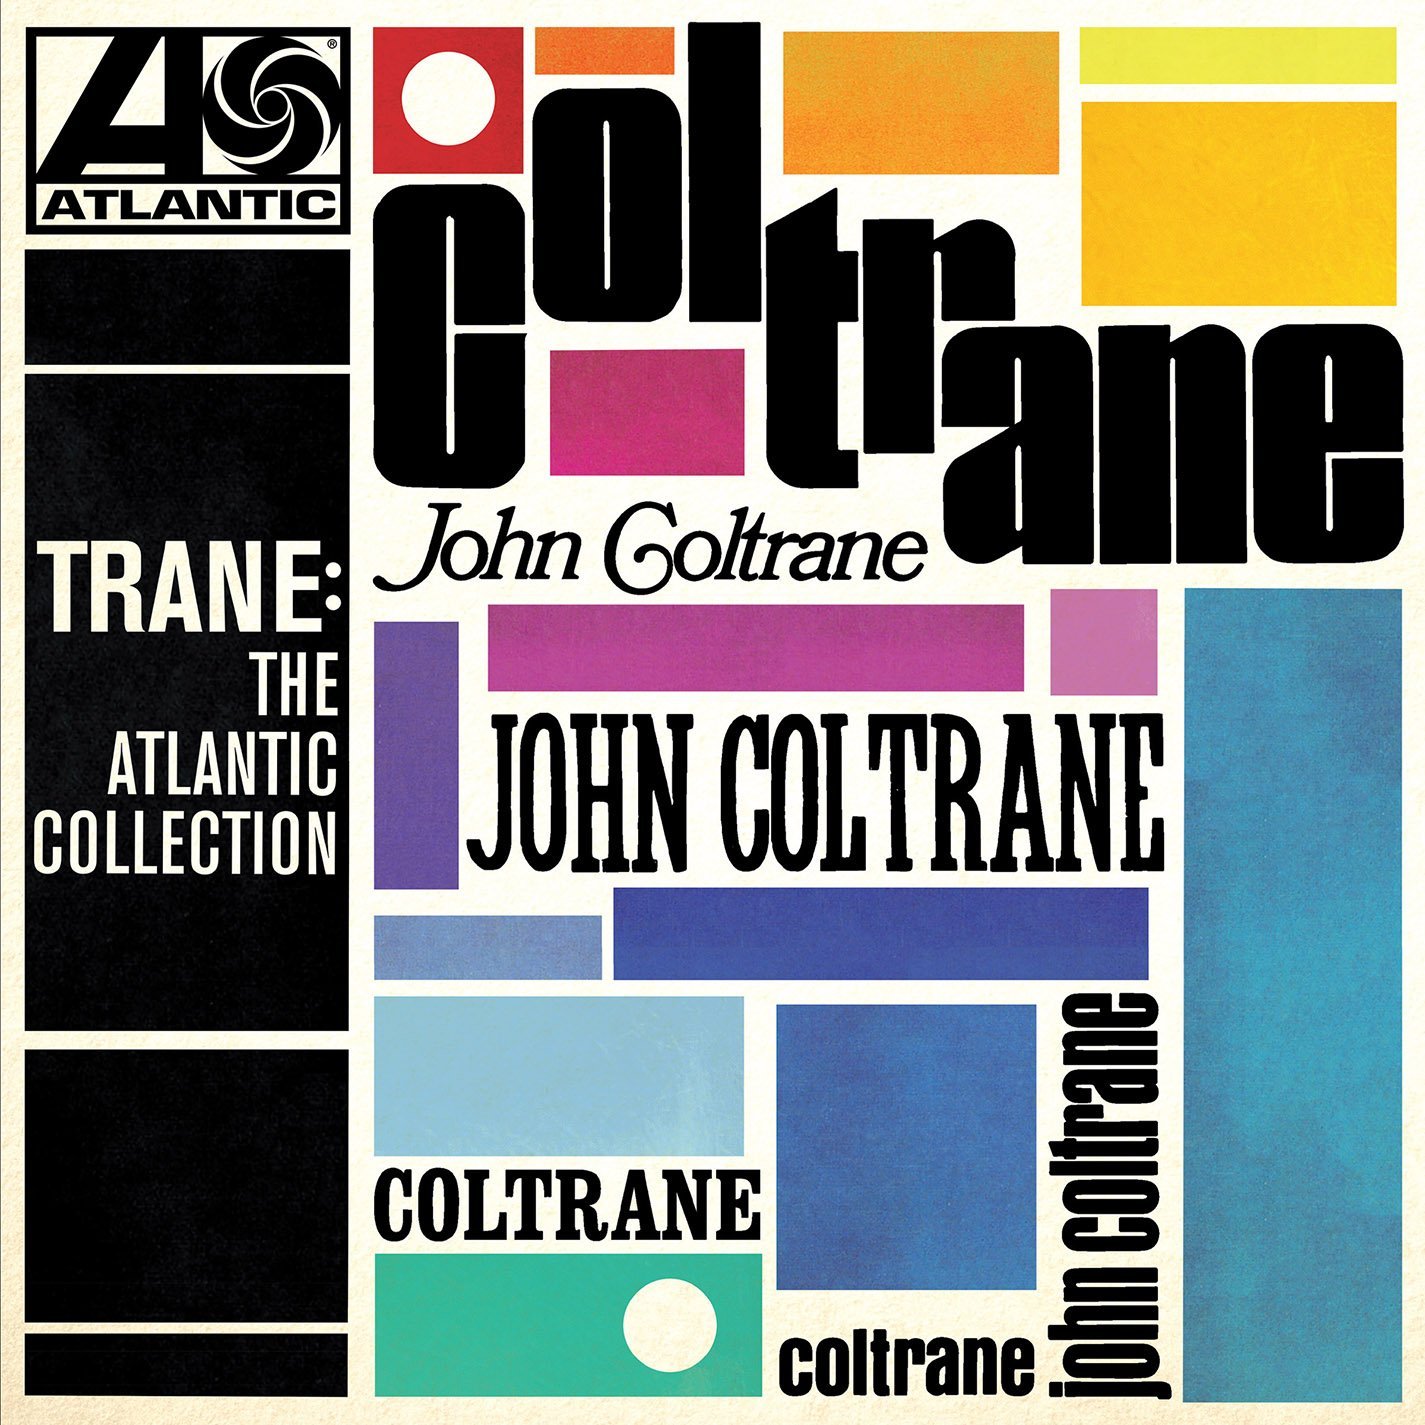 JOHN COLTRANE - Trane: The Atlantic Collection cover 